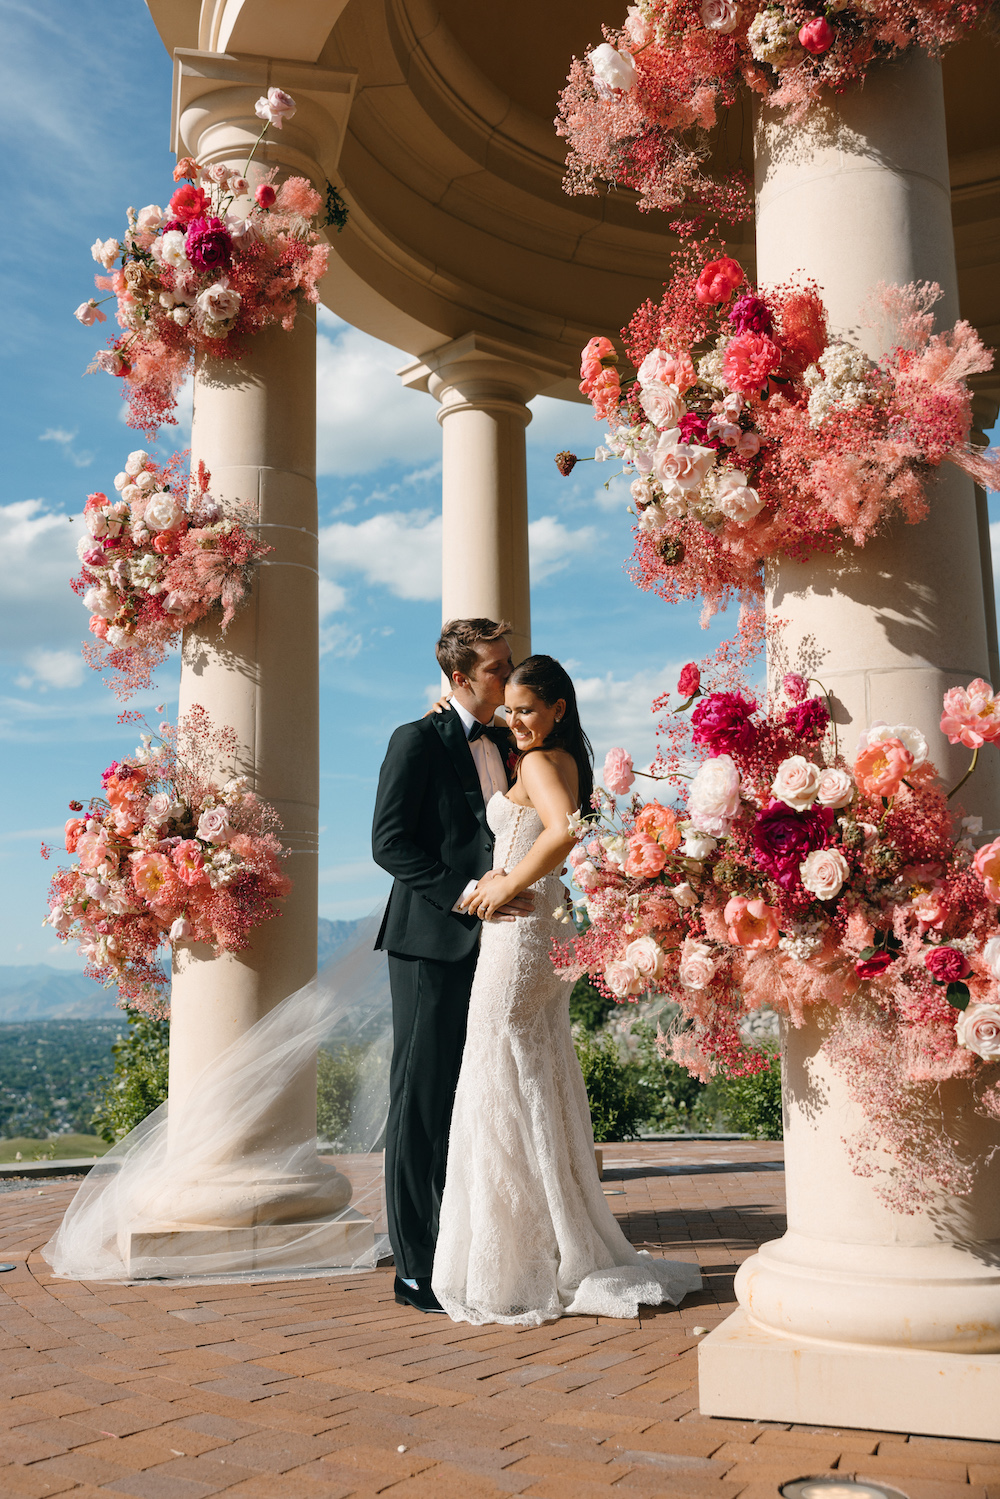 13 Reasons Why" Star Tyler Barnhardt and Adriana Schap's Dream Wedding